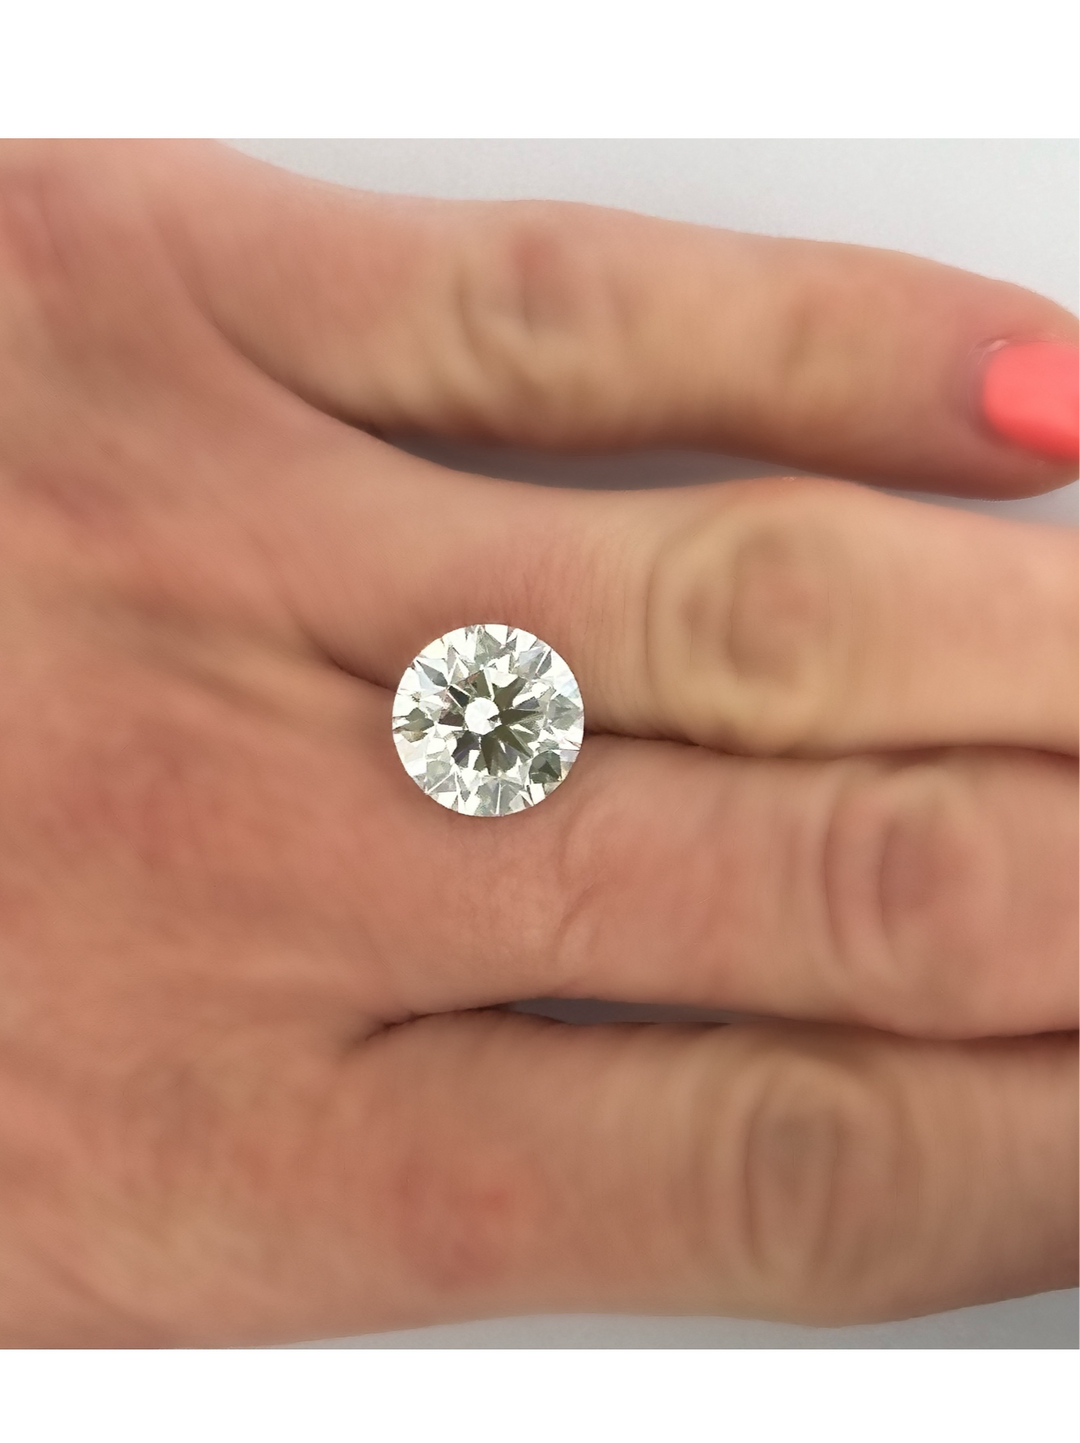 Over 6 carat lab grown diamond on hand 